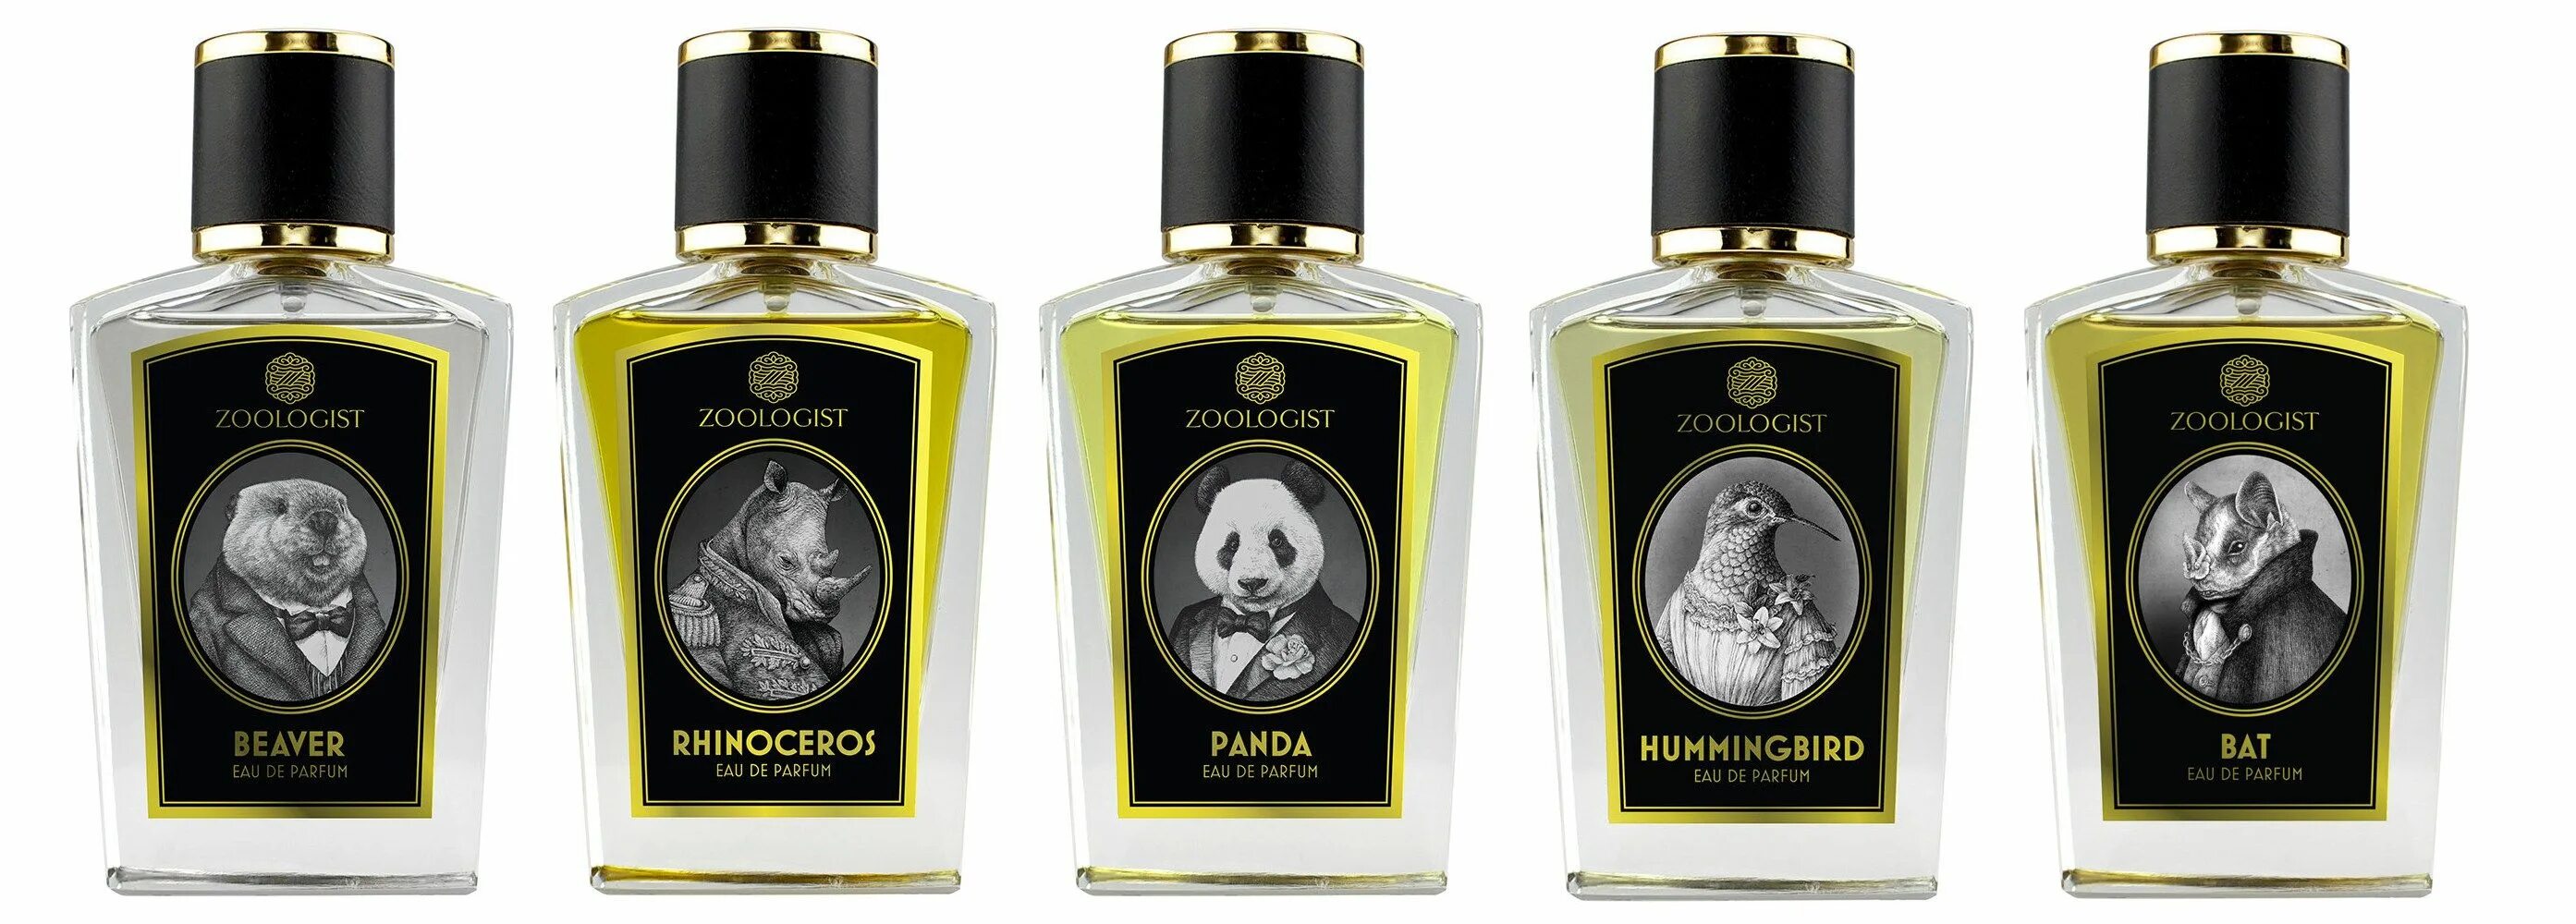 Zoologist perfumes. Зоологист Парфюм. Panda zoologist Perfumes. Zoologist Perfumes Bee. Духи пчела зоологист.